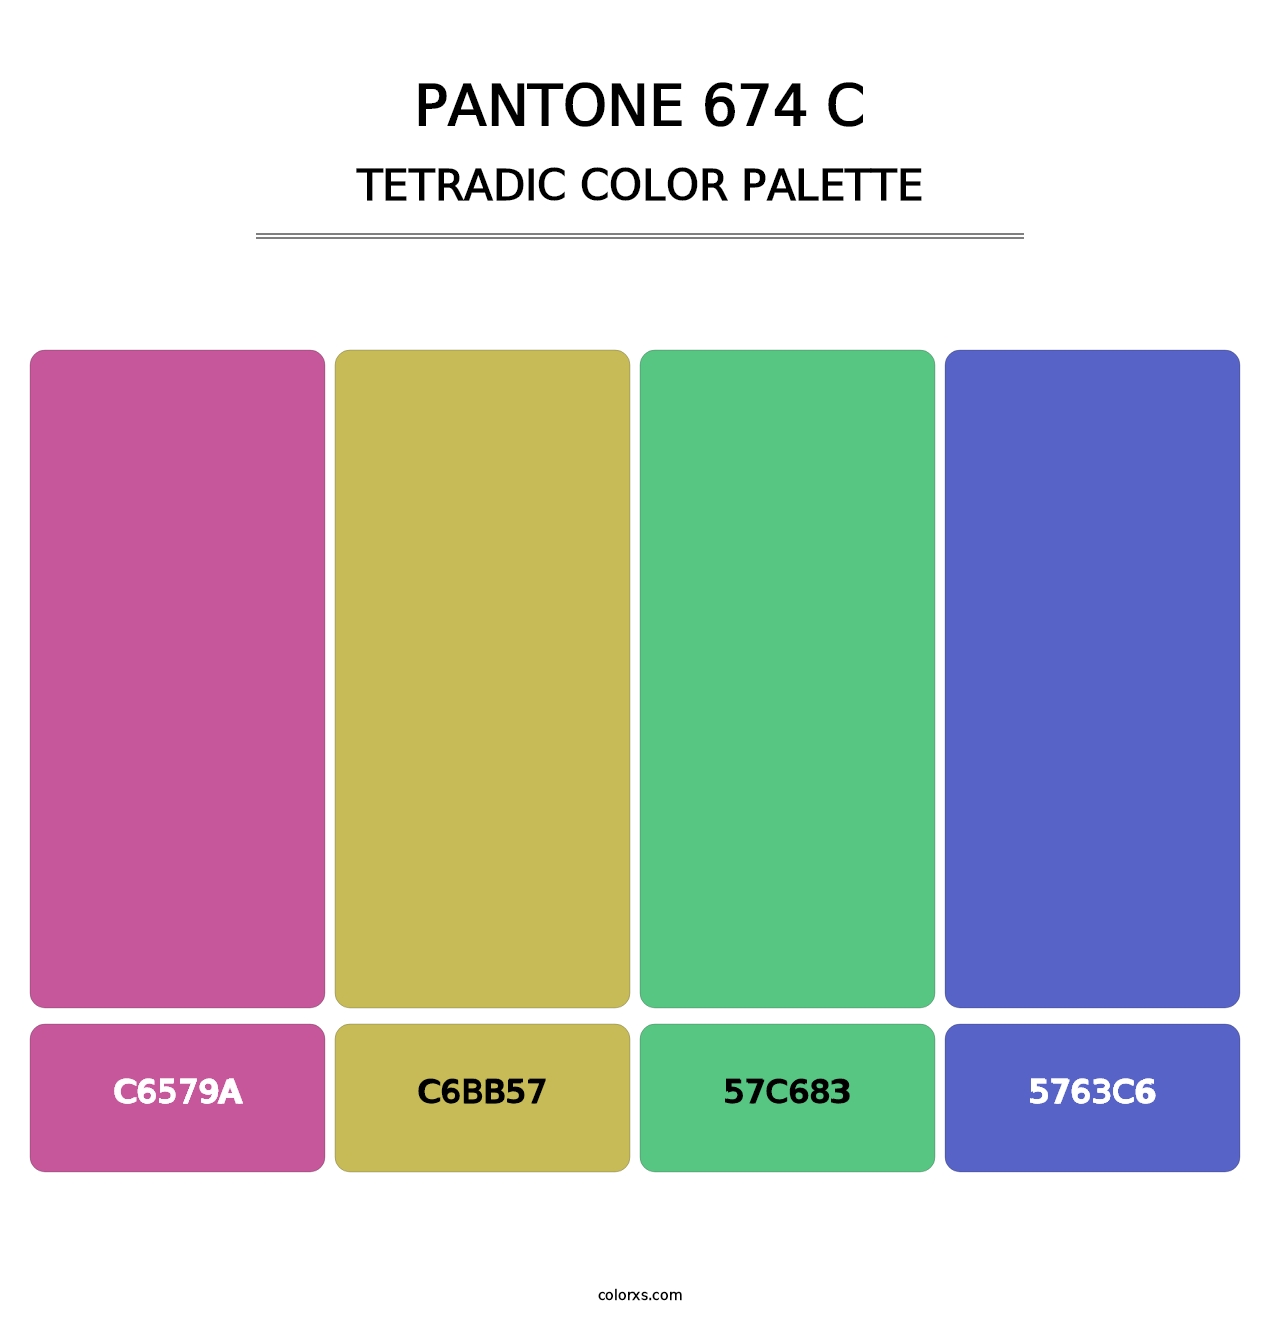 PANTONE 674 C - Tetradic Color Palette